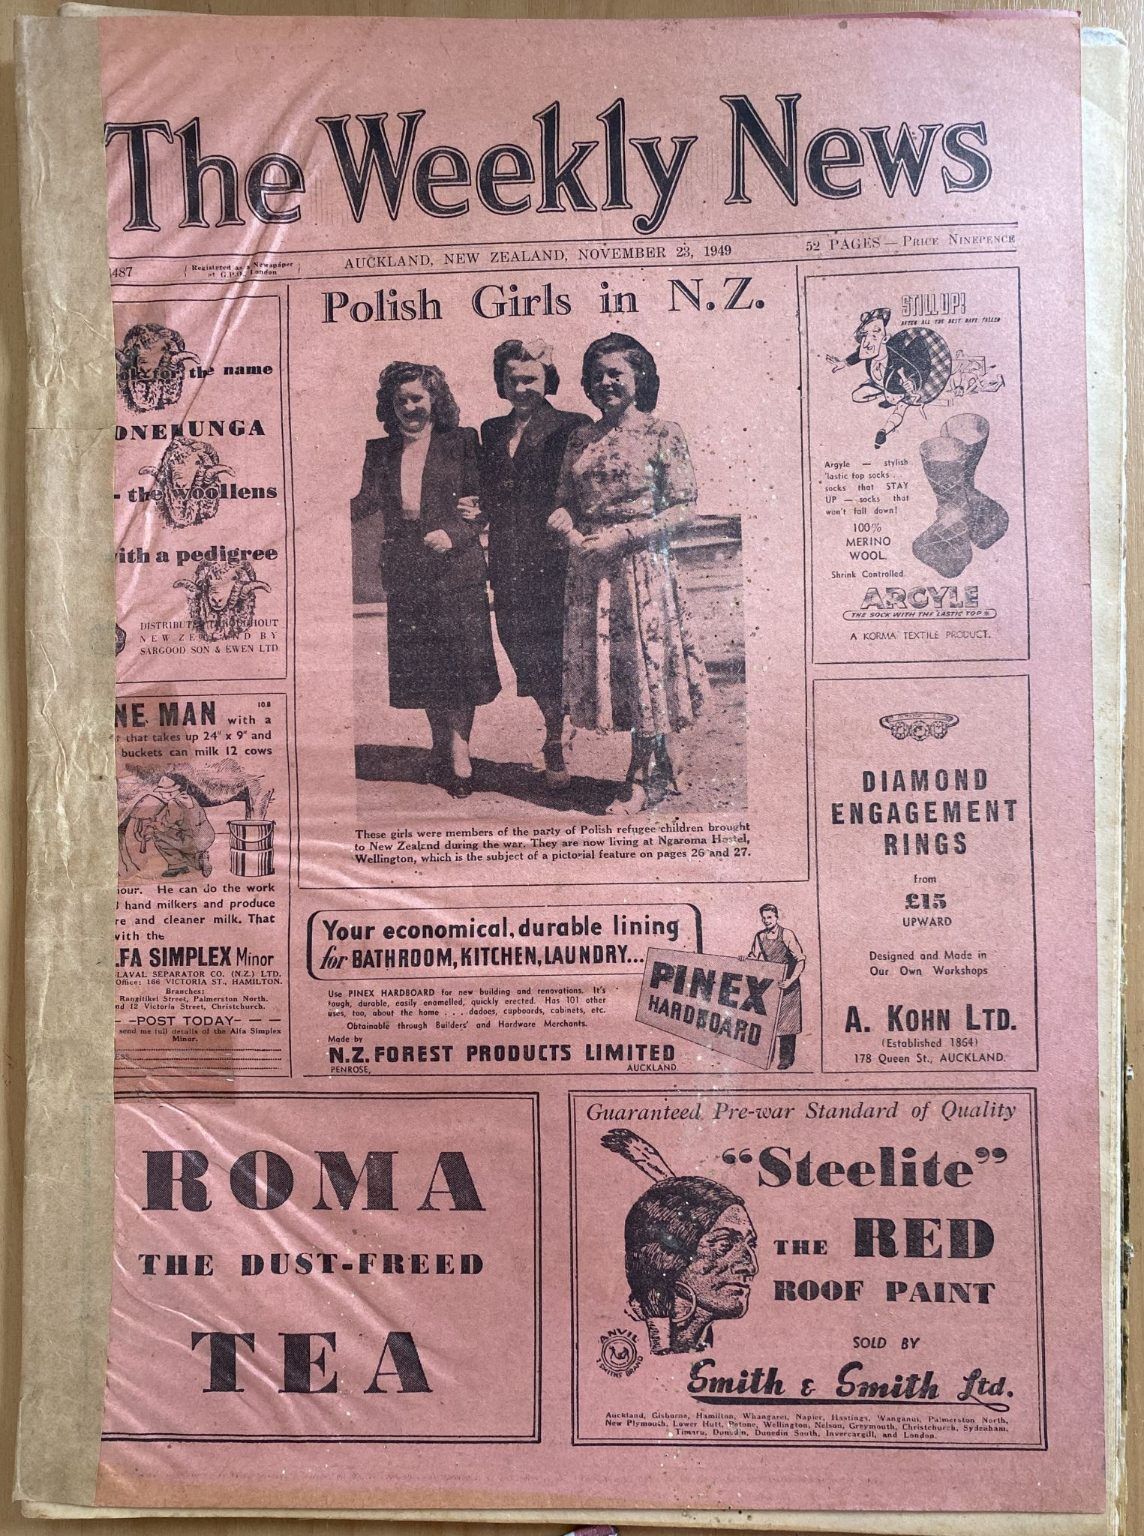 OLD NEWSPAPER: The Weekly News, No. 4487, 23 November 1949